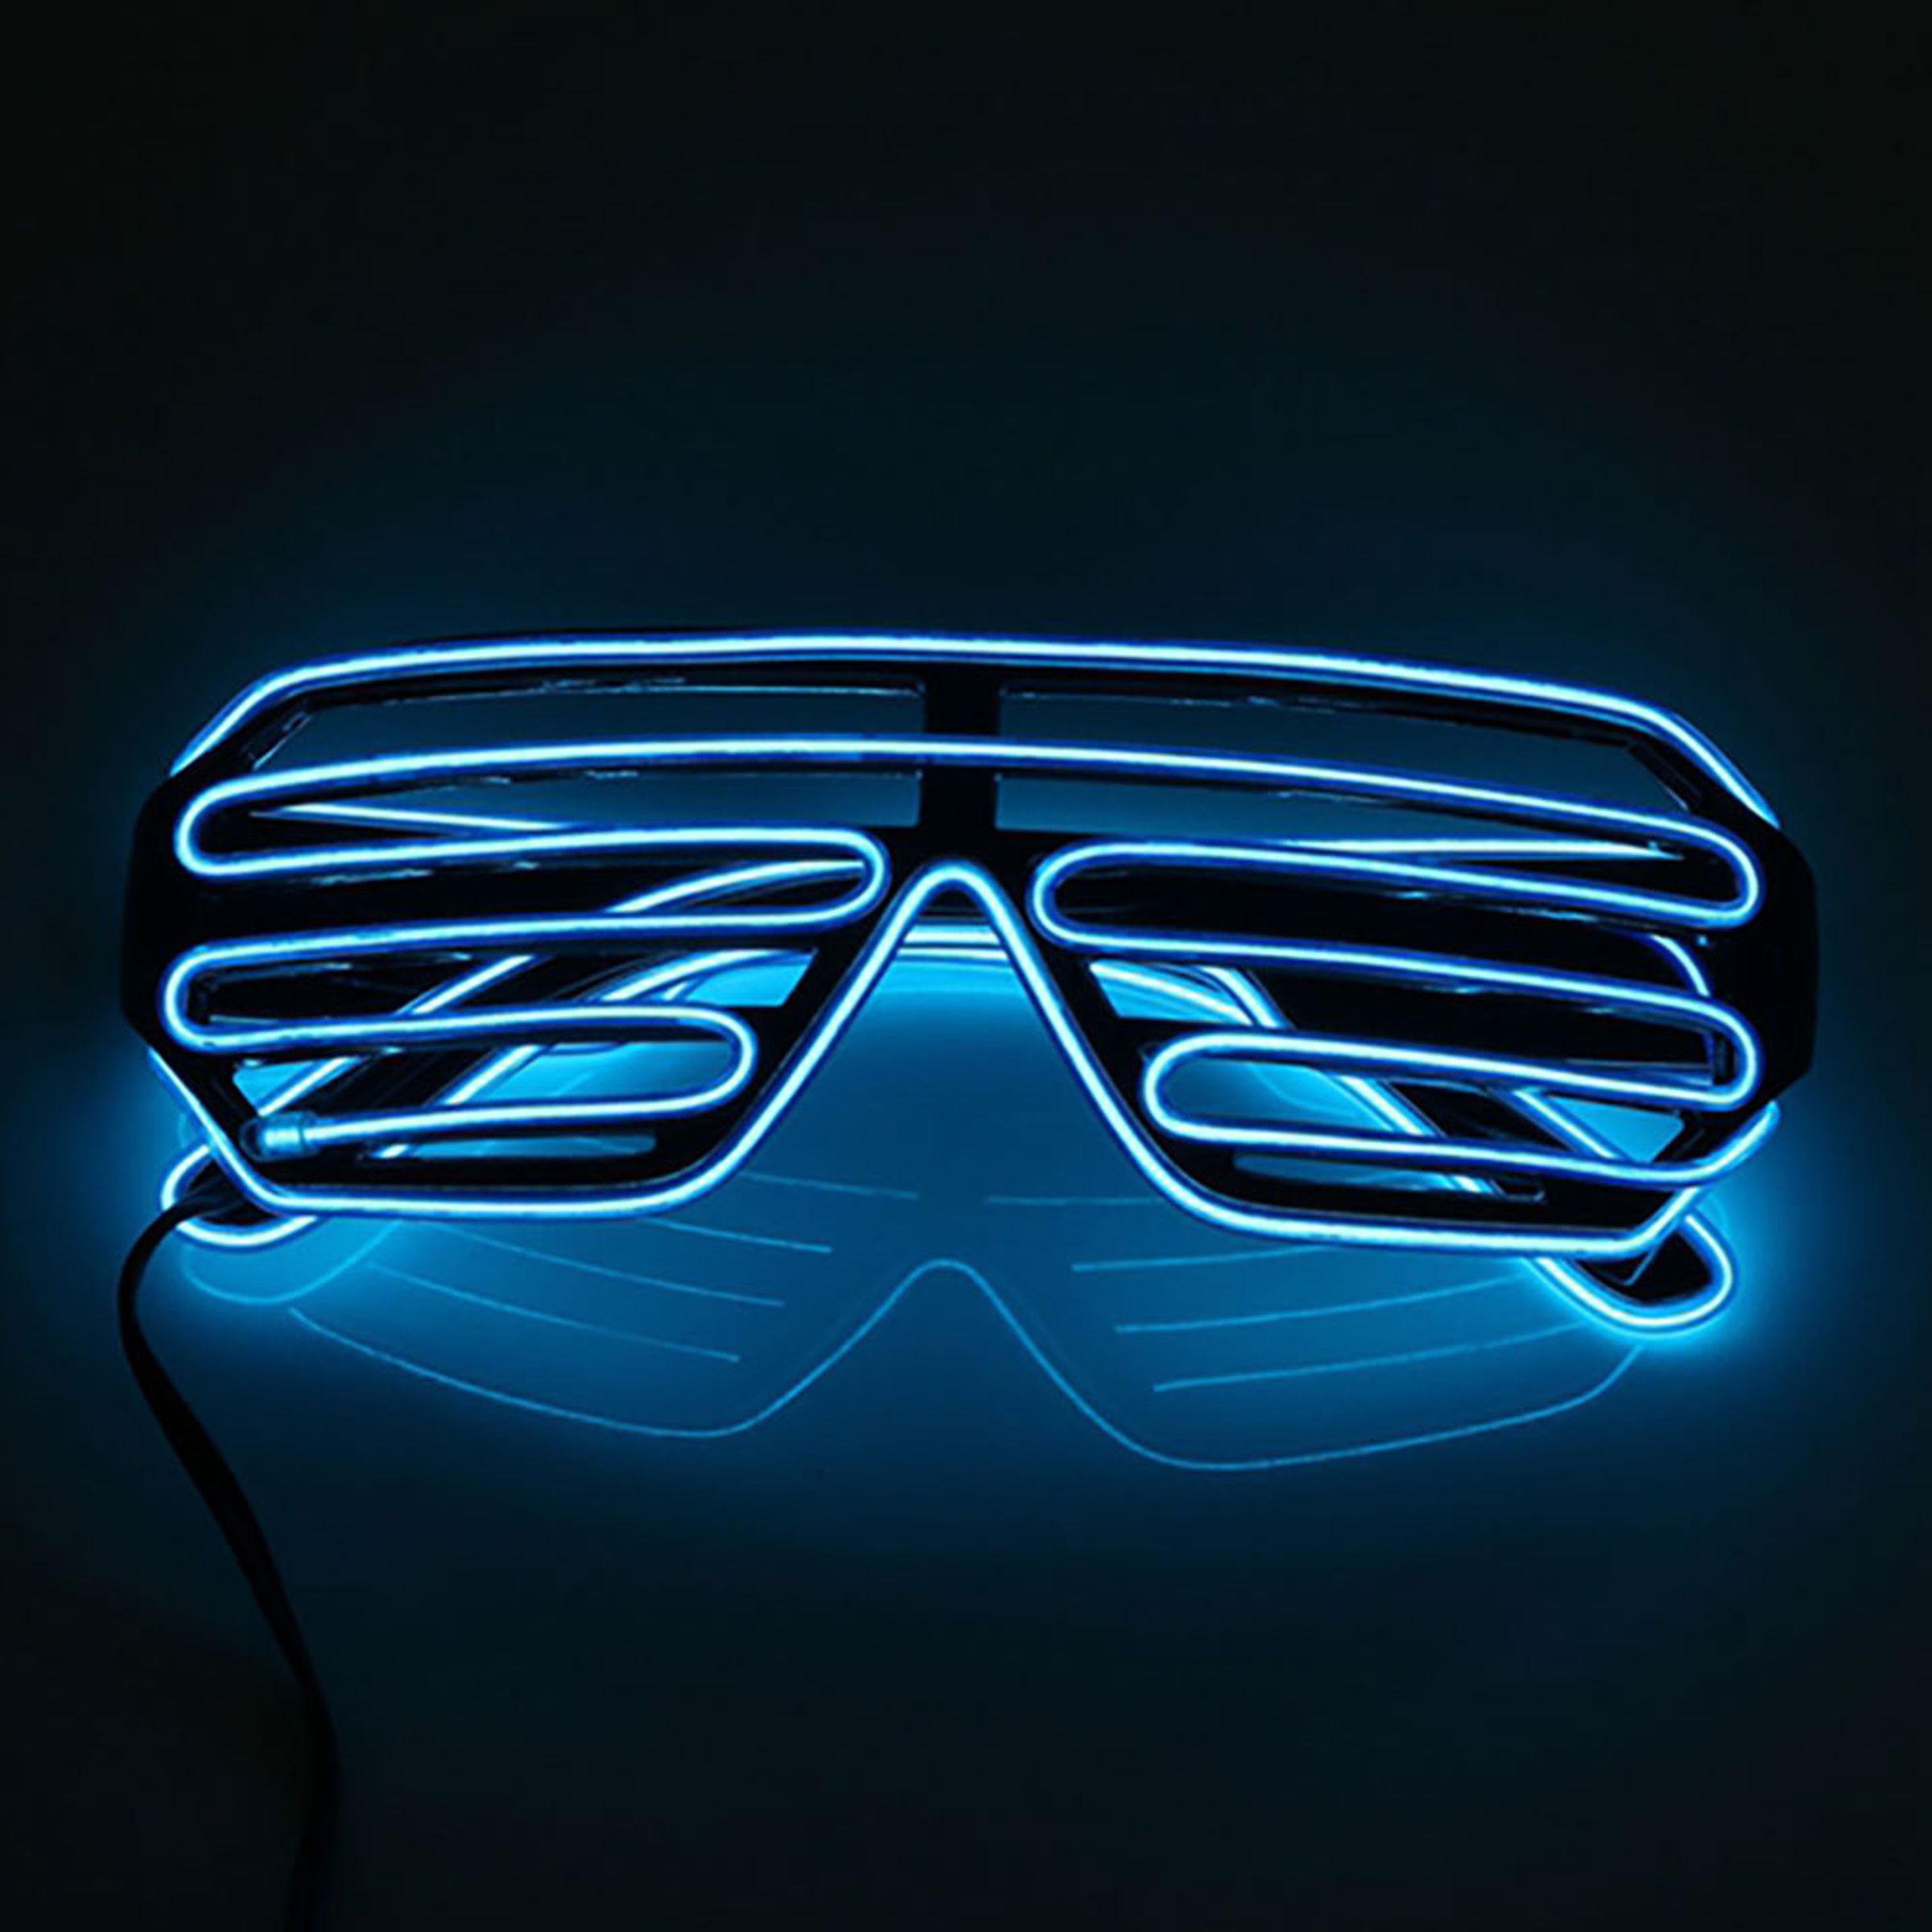 El Wire LED Glasögon Shutter - Blå